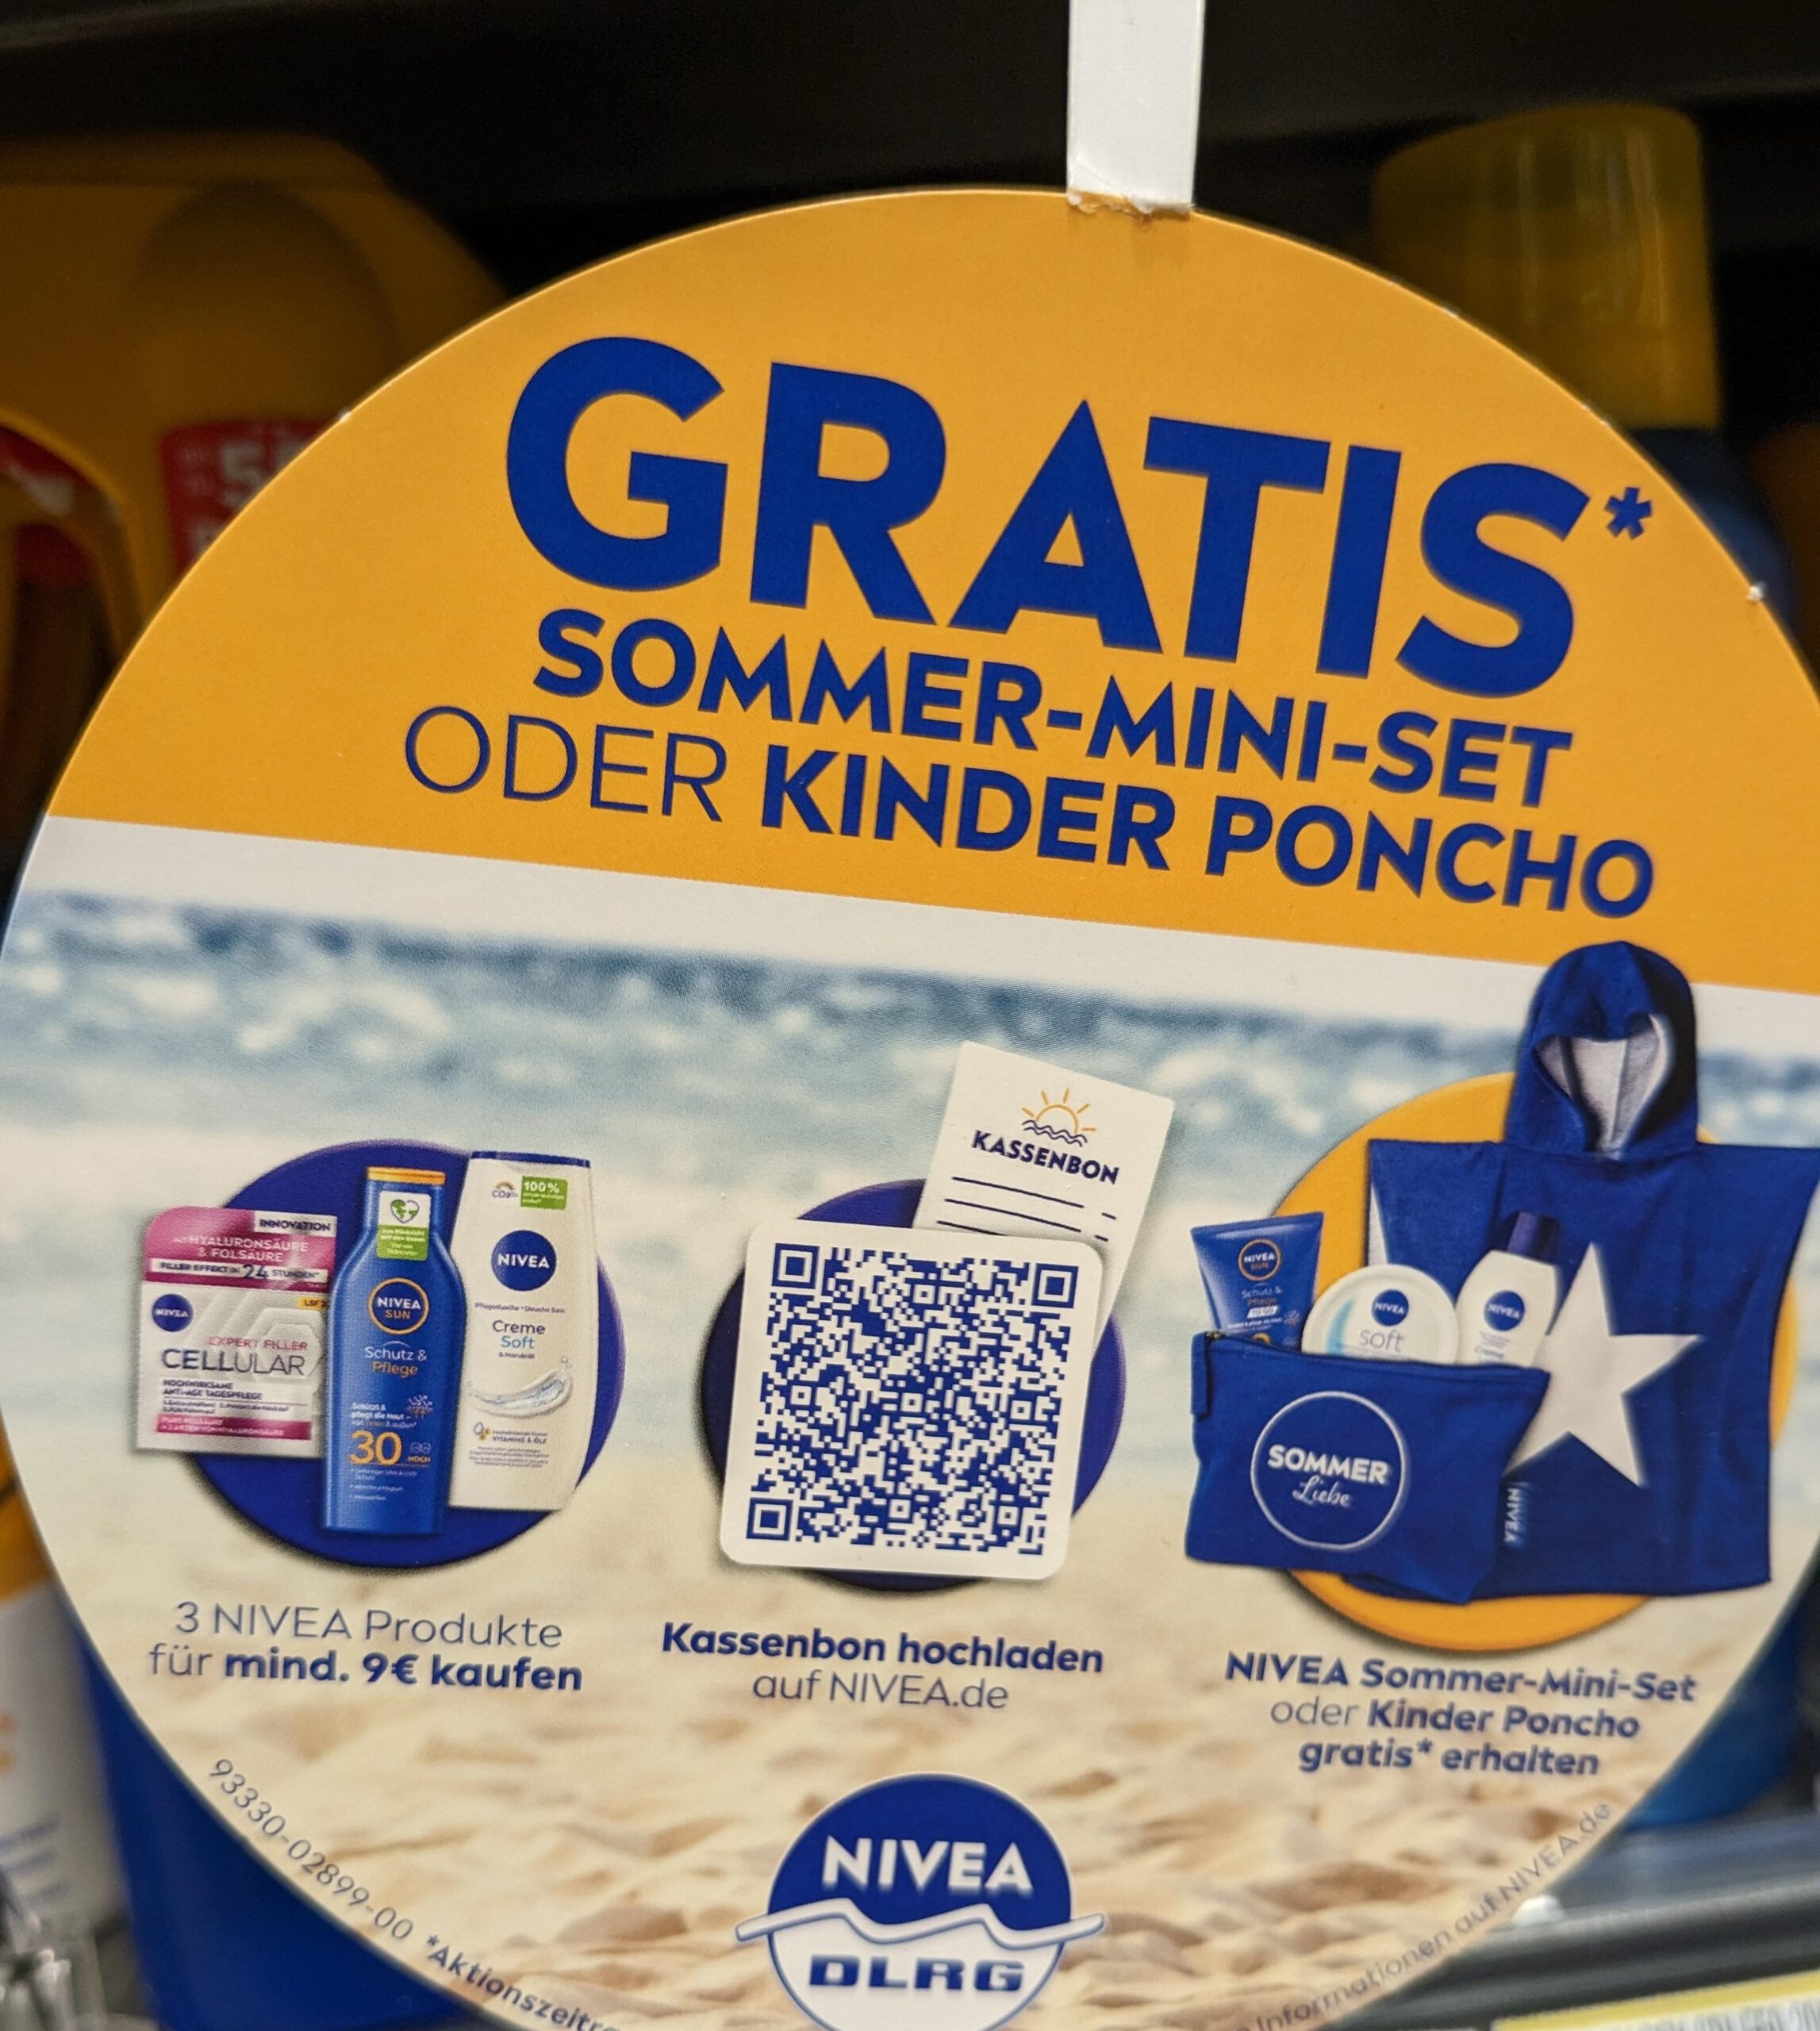 Nivea: Sommer-Mini-Set gratis- Kassenbon hochladen